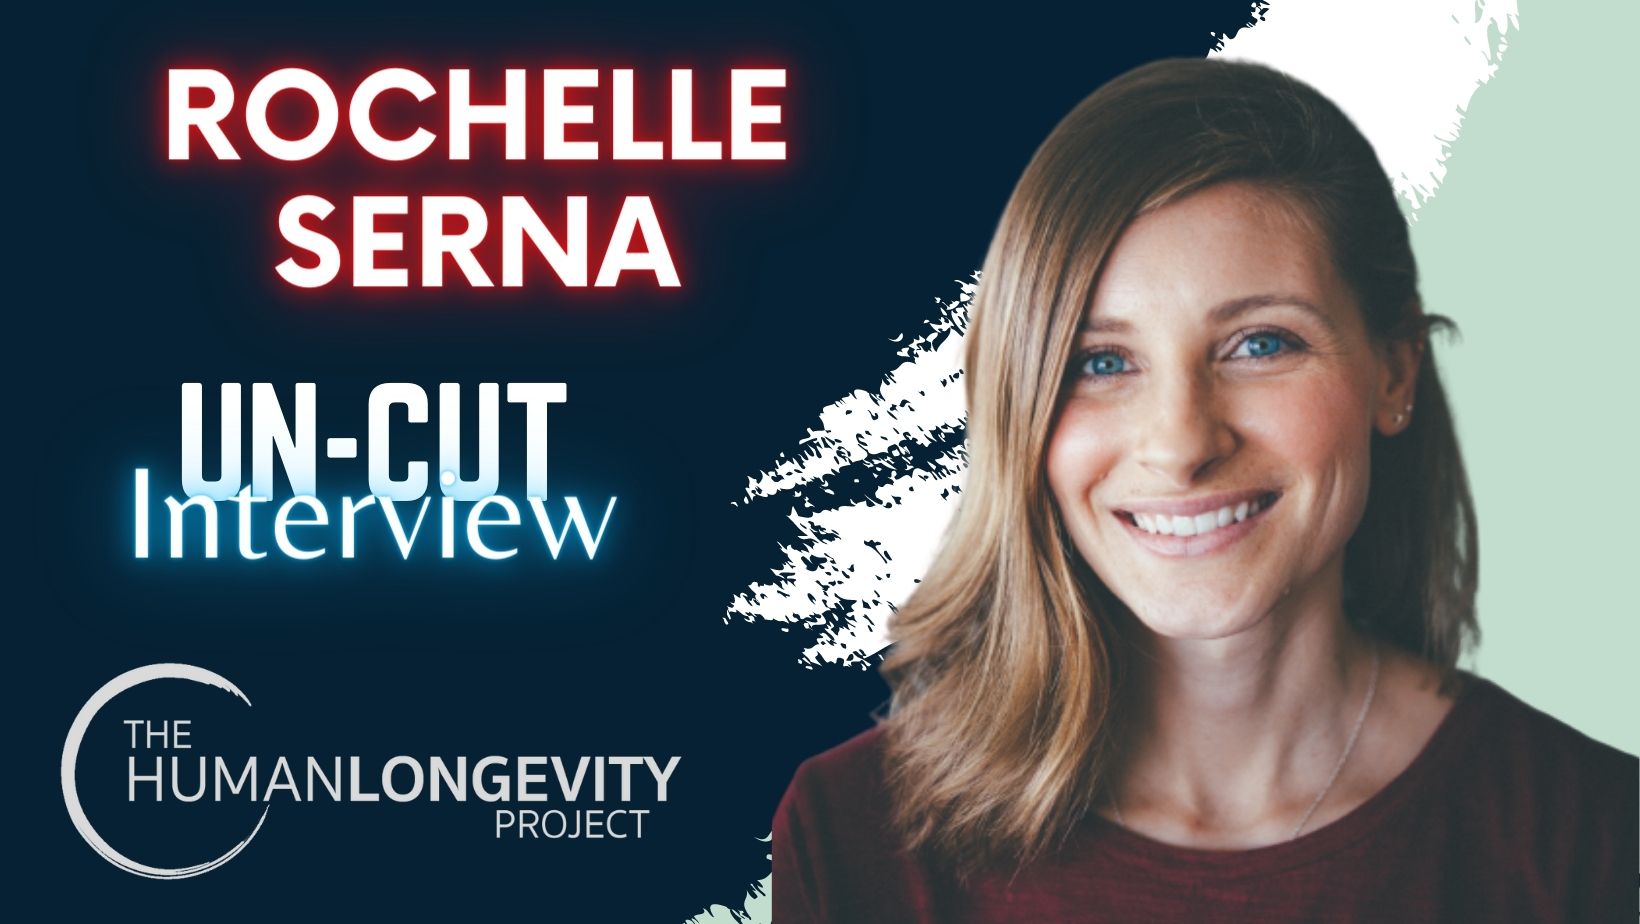 Human Longevity Project Uncut Interview With Rochelle Serna